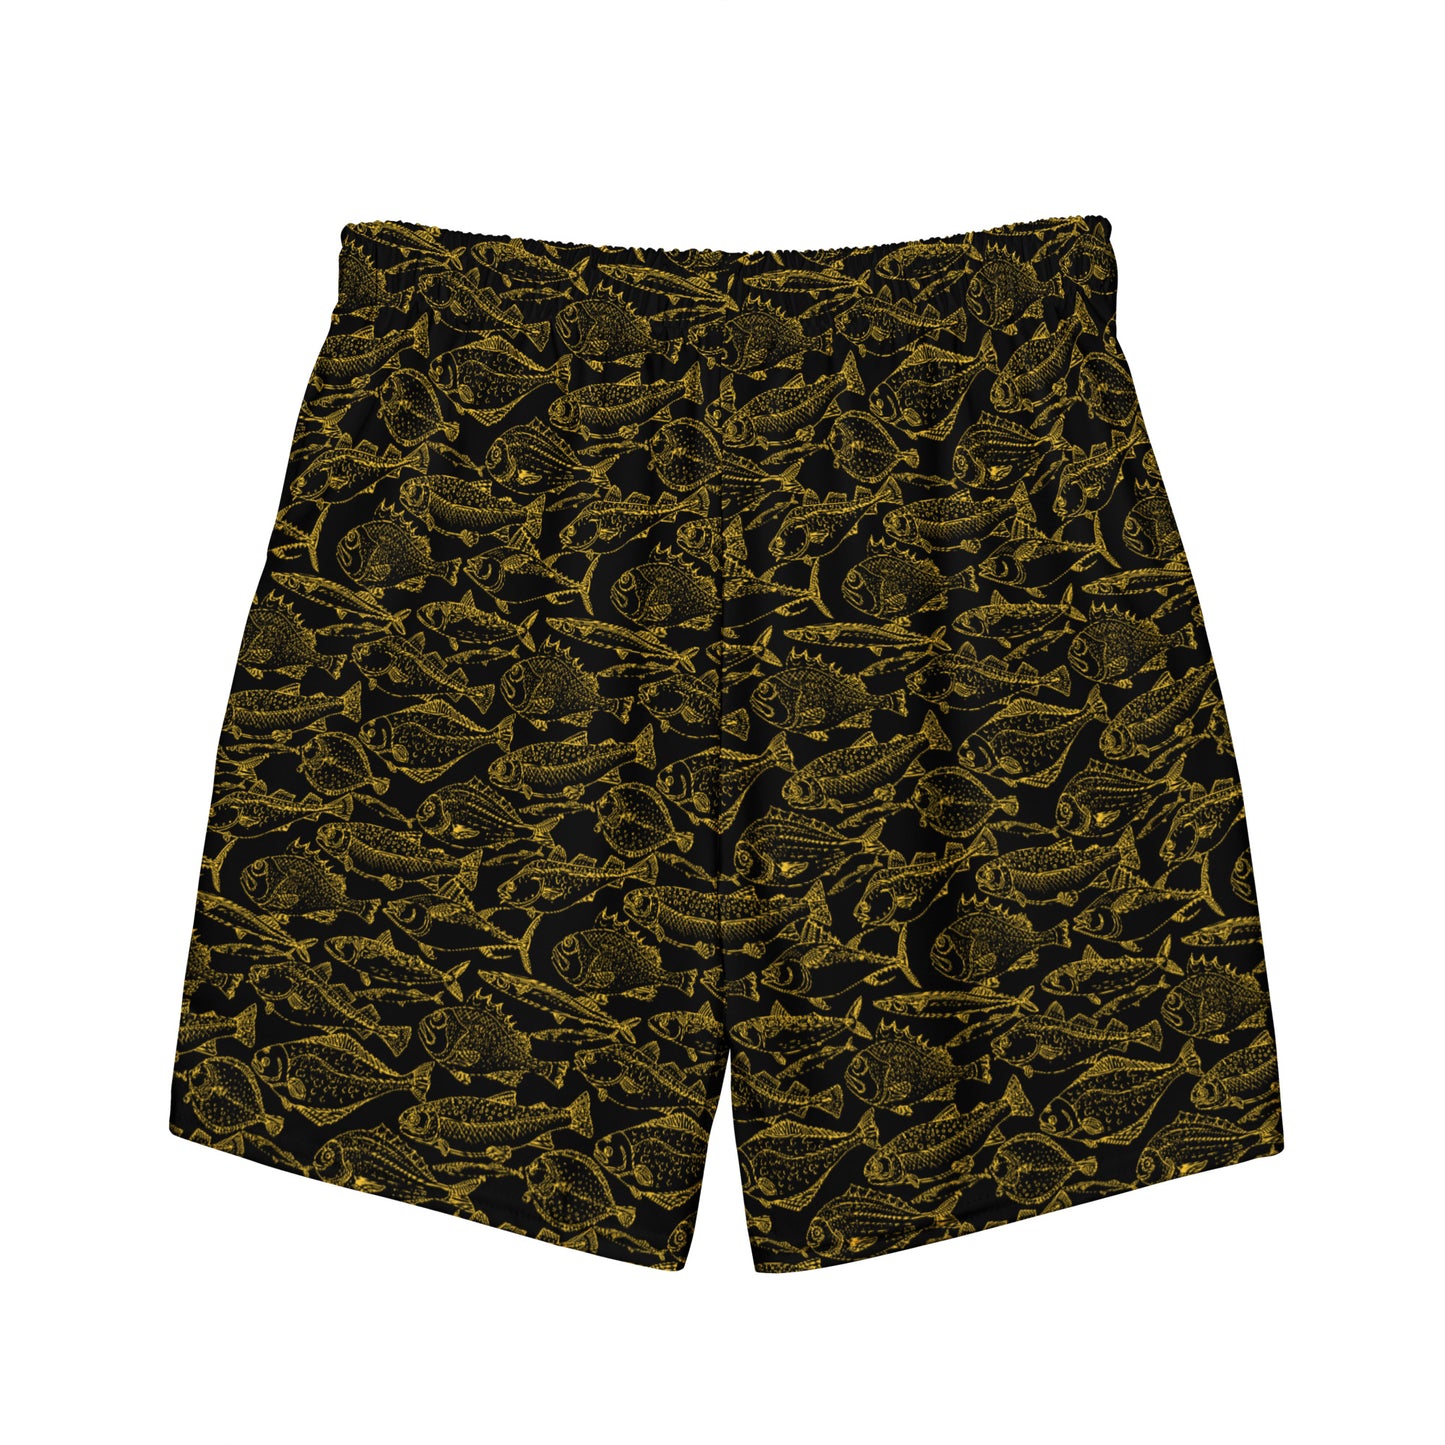 Men's Eco Sea of Gold Riches Swim Trunks - Tropical Seas Clothing 